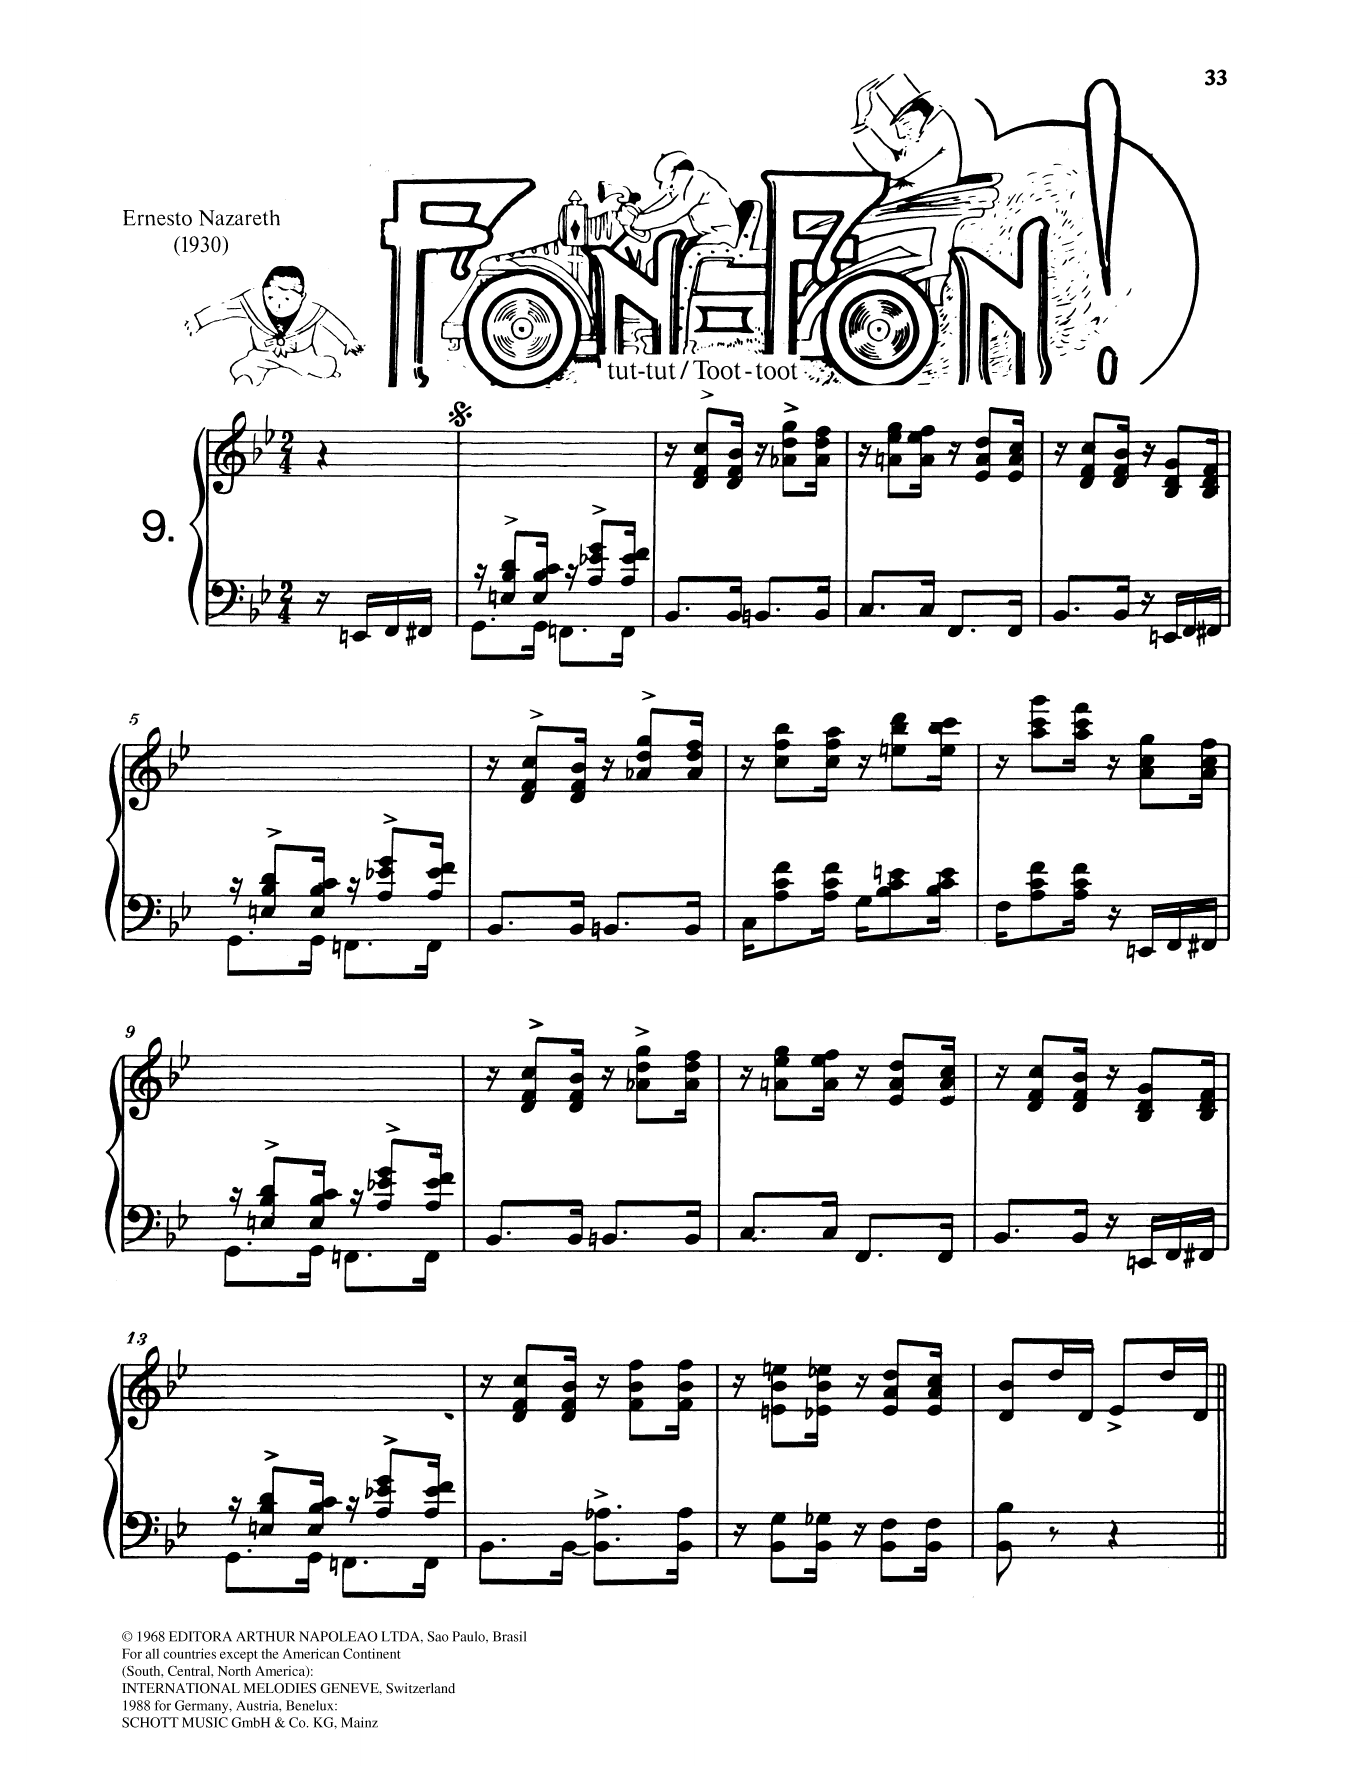 Ernesto Nazareth Fon-Fon Sheet Music Notes & Chords for Piano Solo - Download or Print PDF